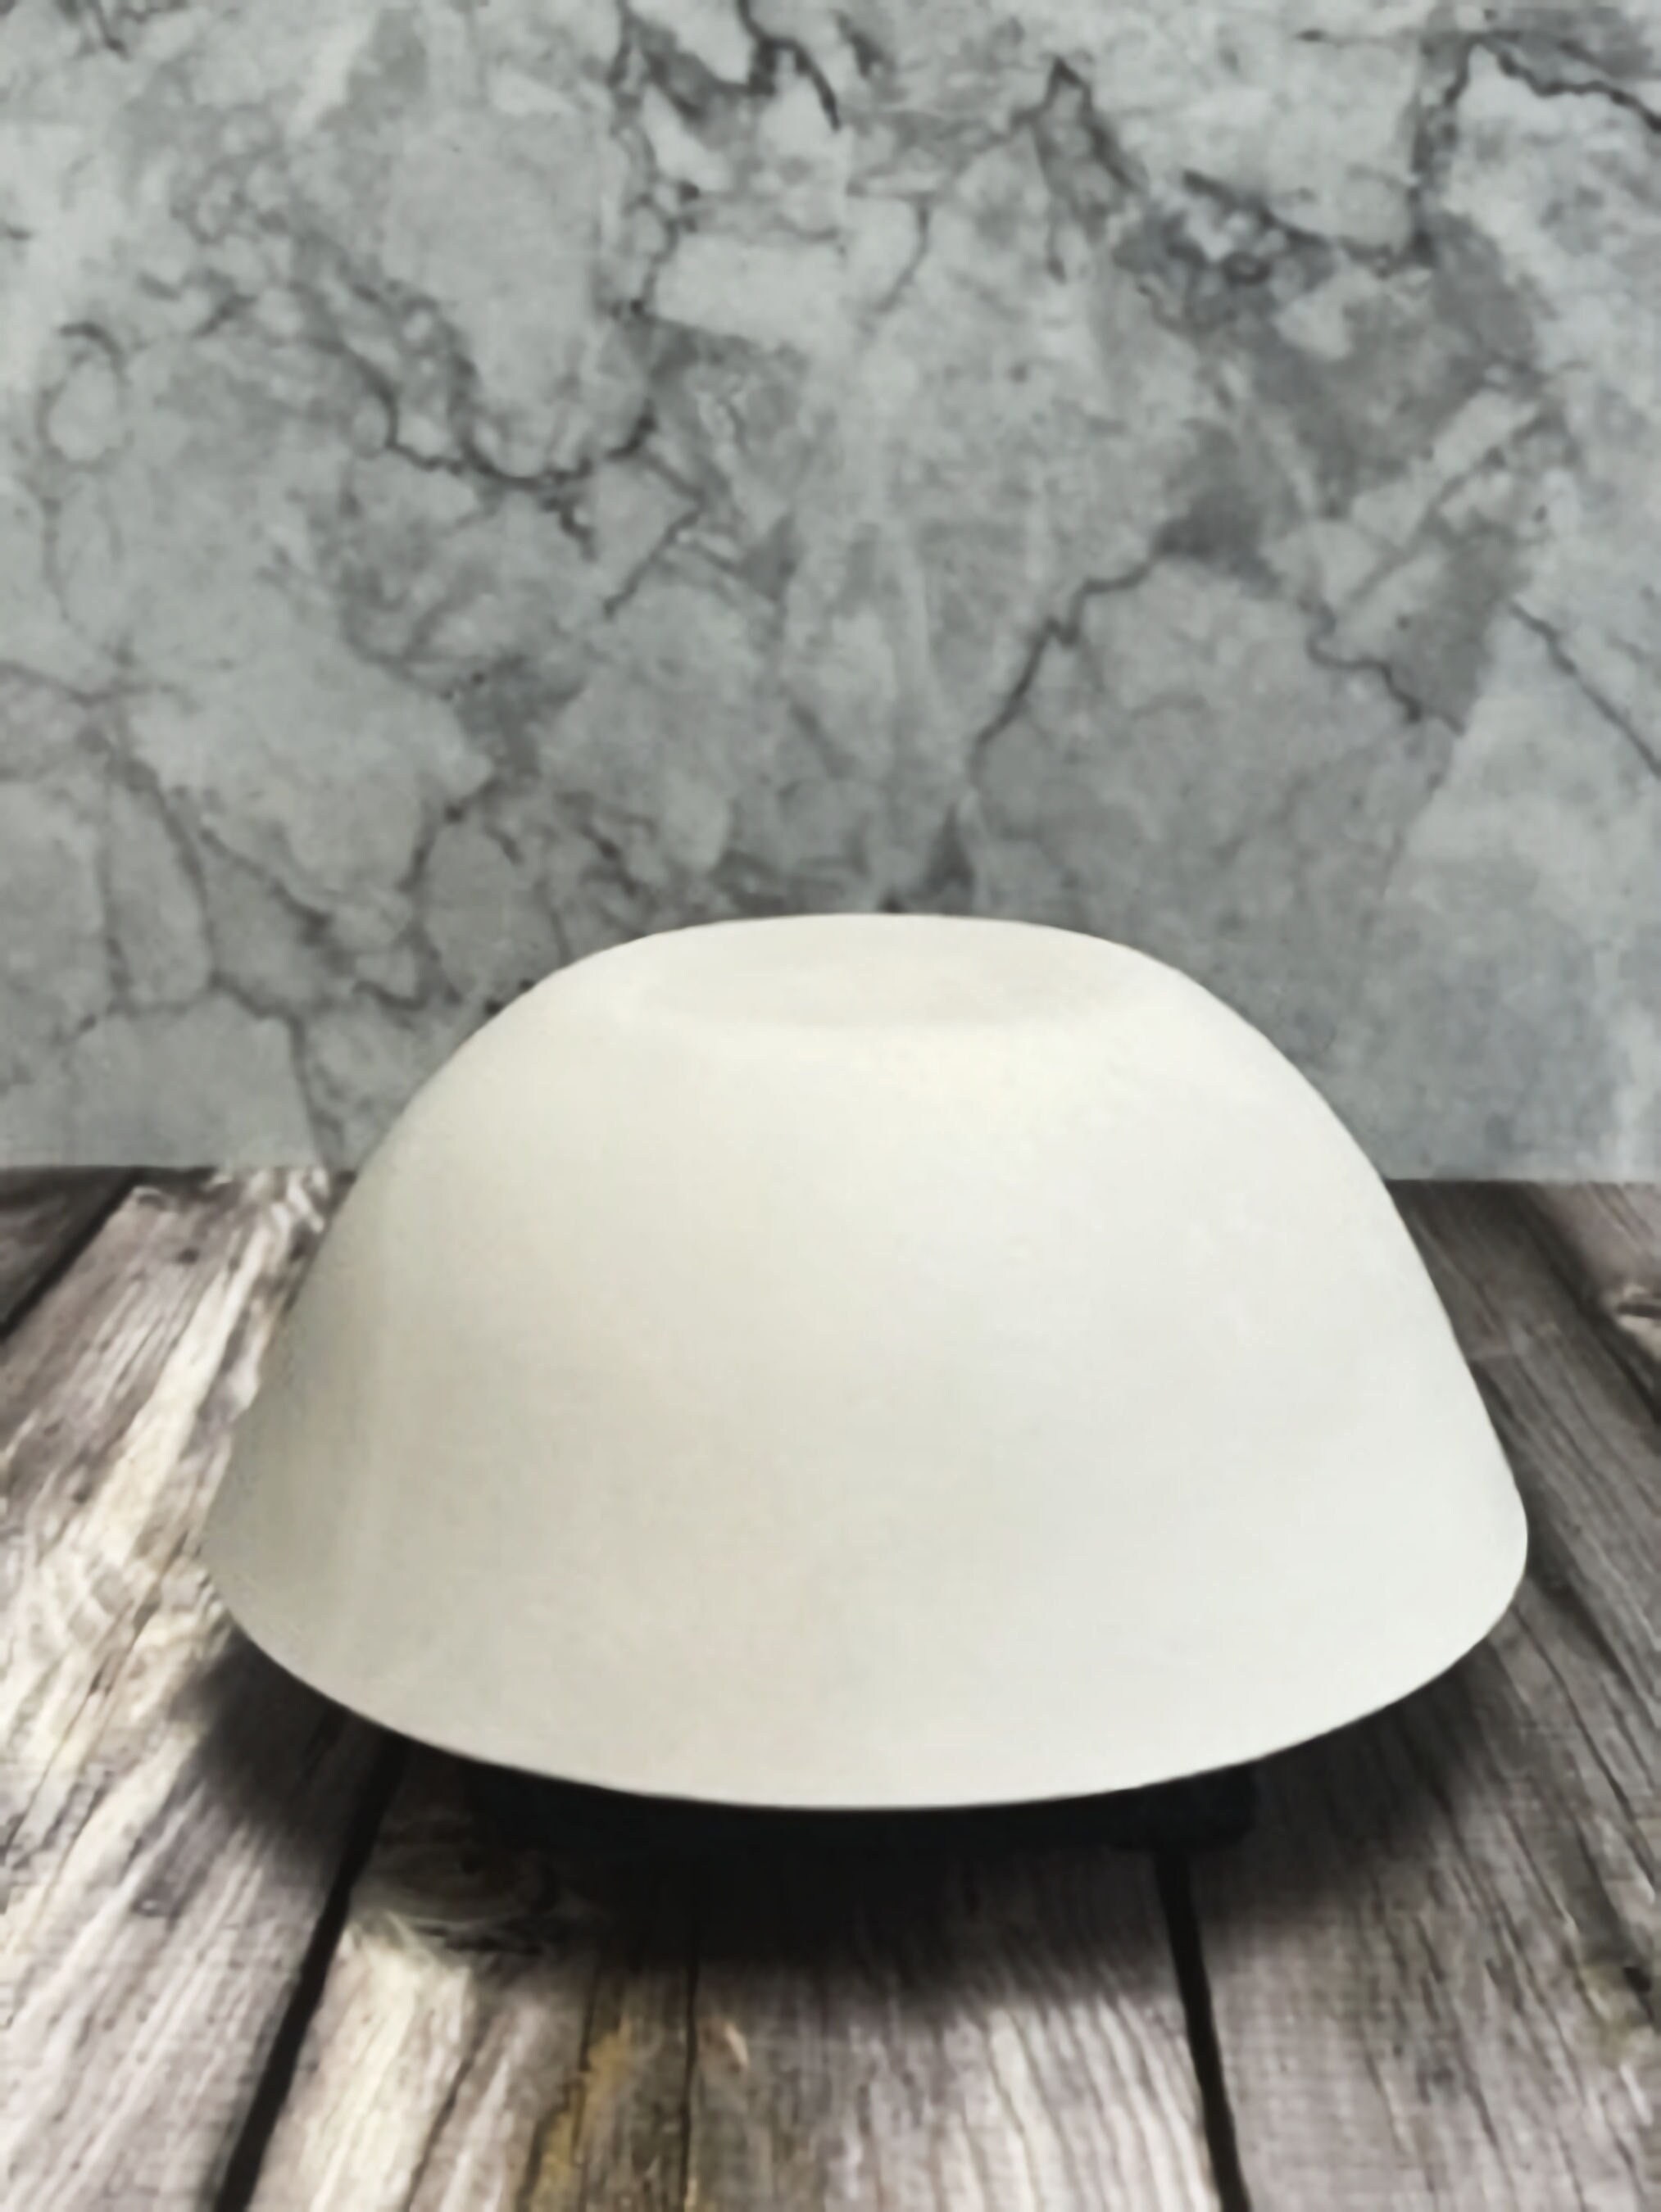 11.5 Serving Bowl Plaster Drape Mold for Pottery, Ceramics, Made